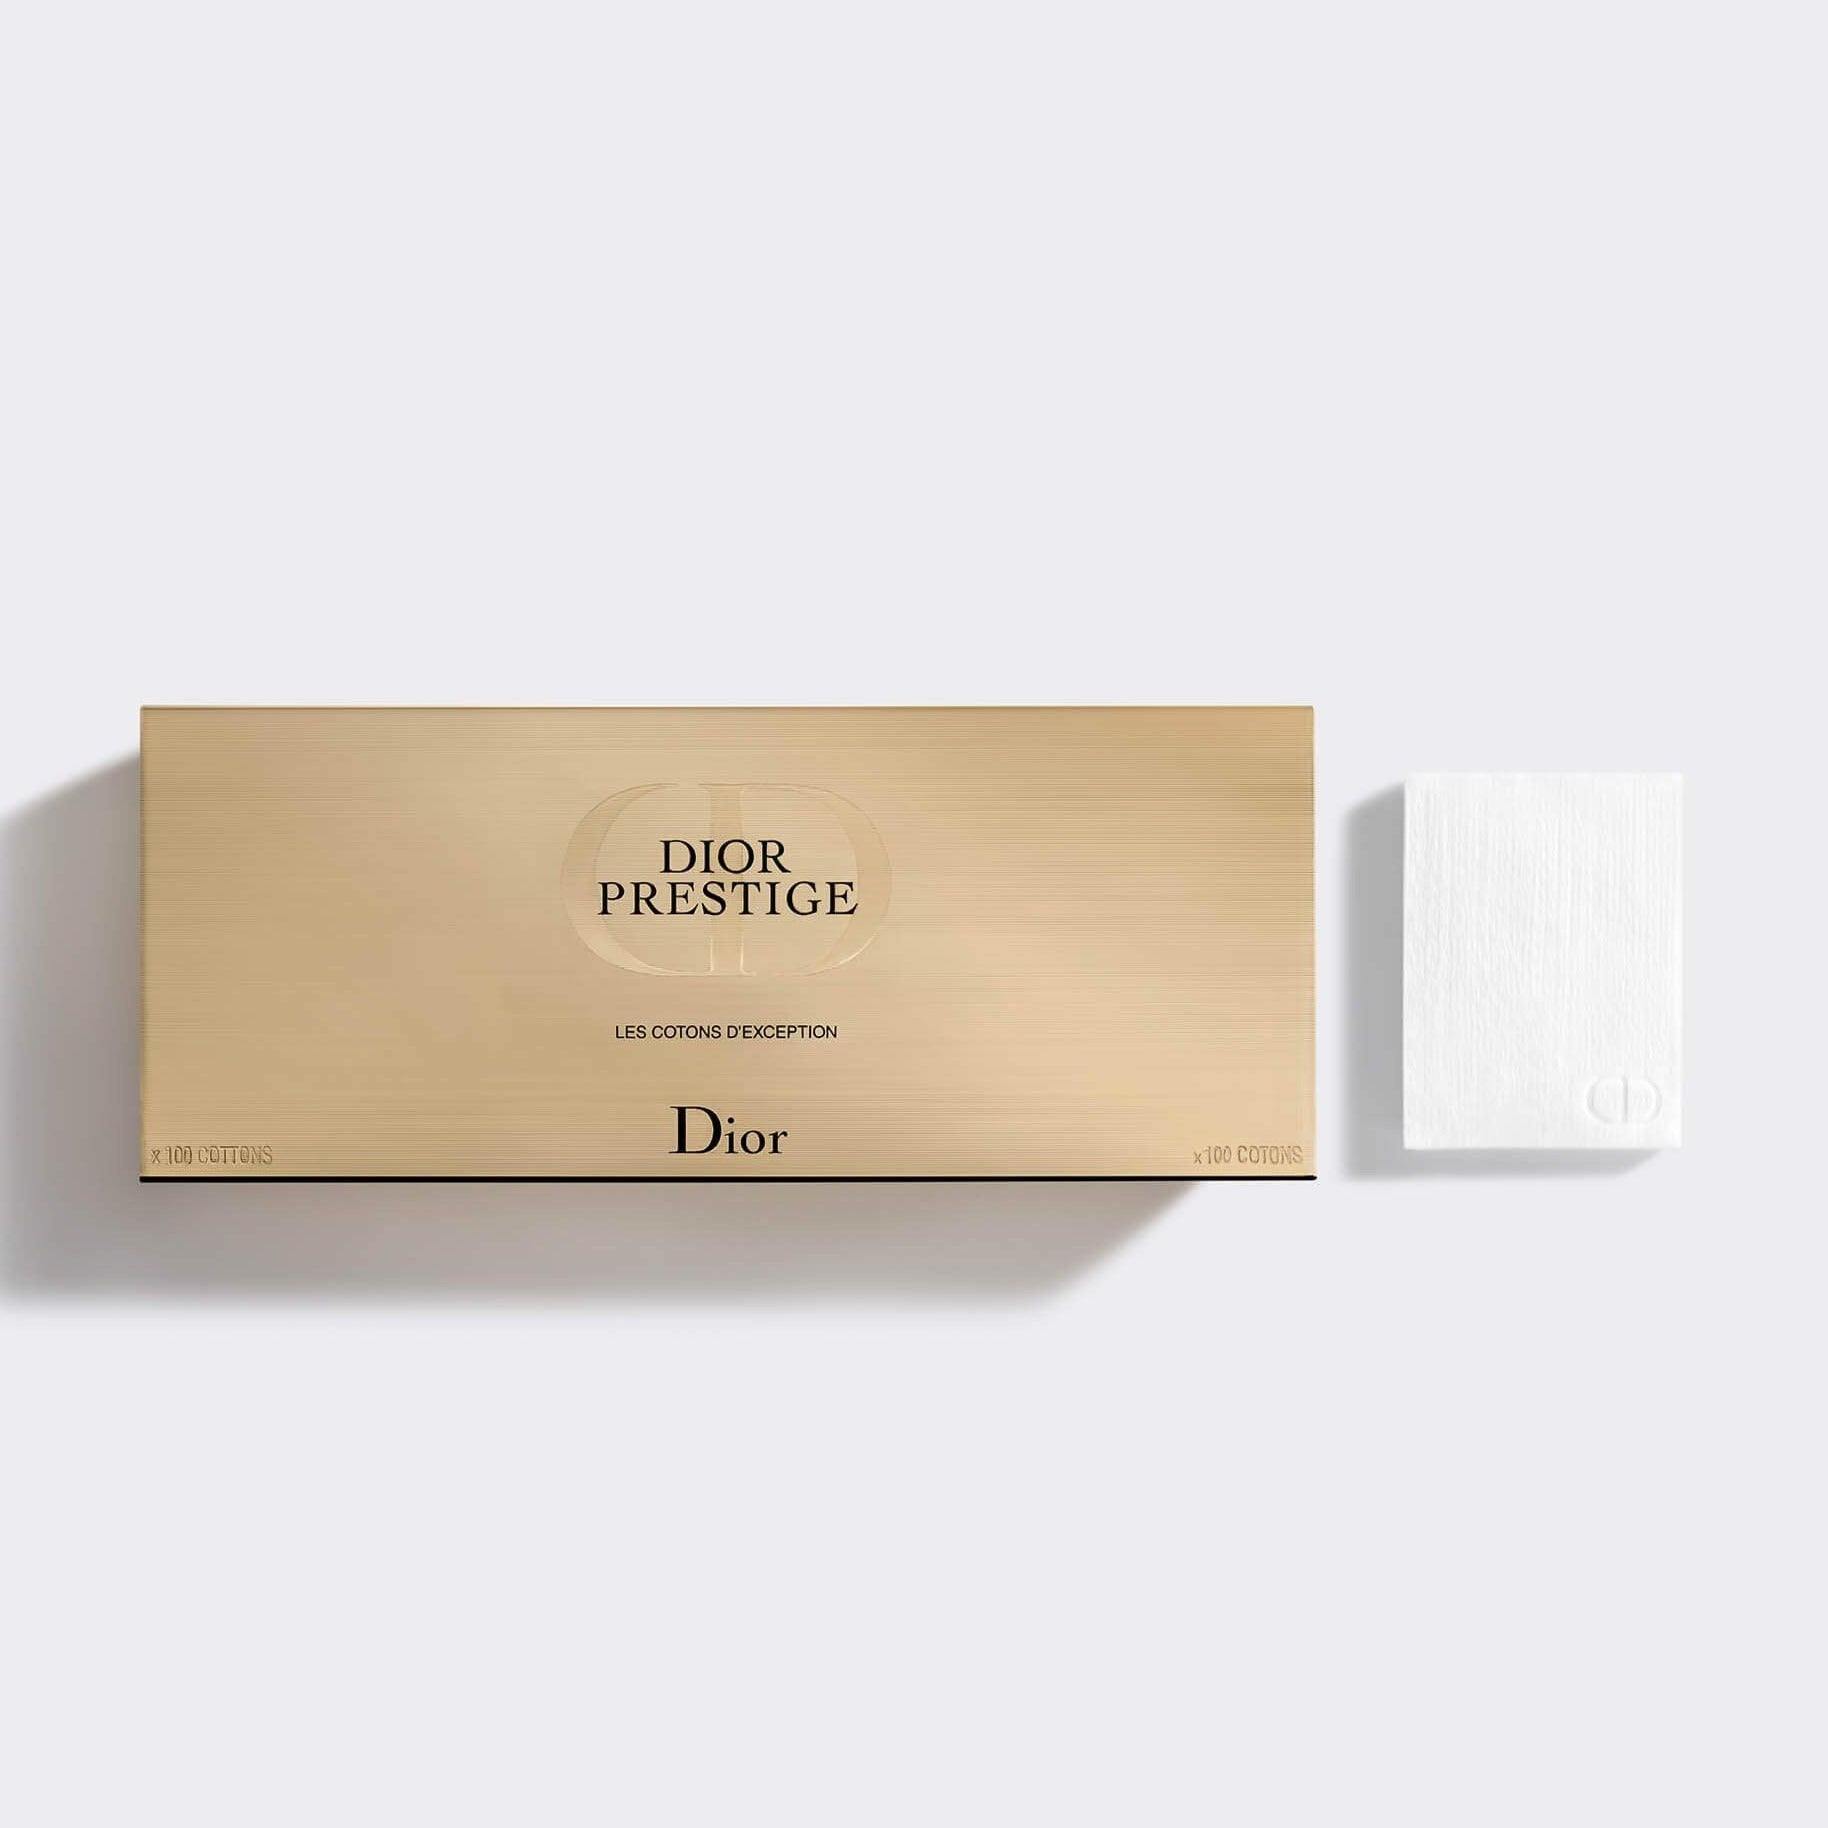 Dior Prestige Exceptional Cotton Pads | 100 % Natural Cotton Fibers